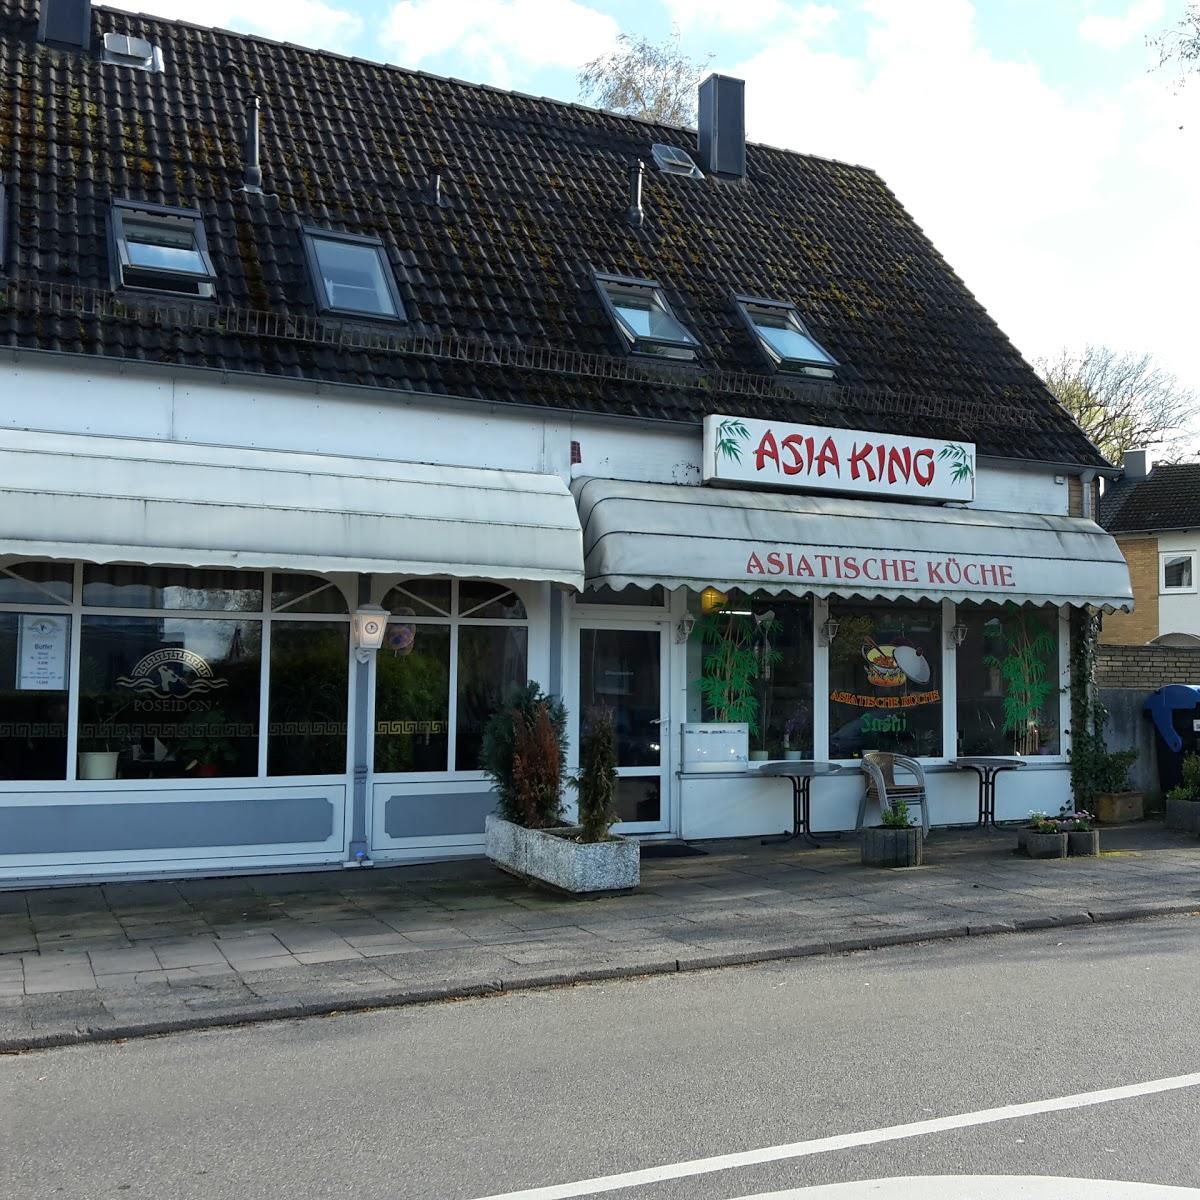 Restaurant "Asia King" in Lübeck